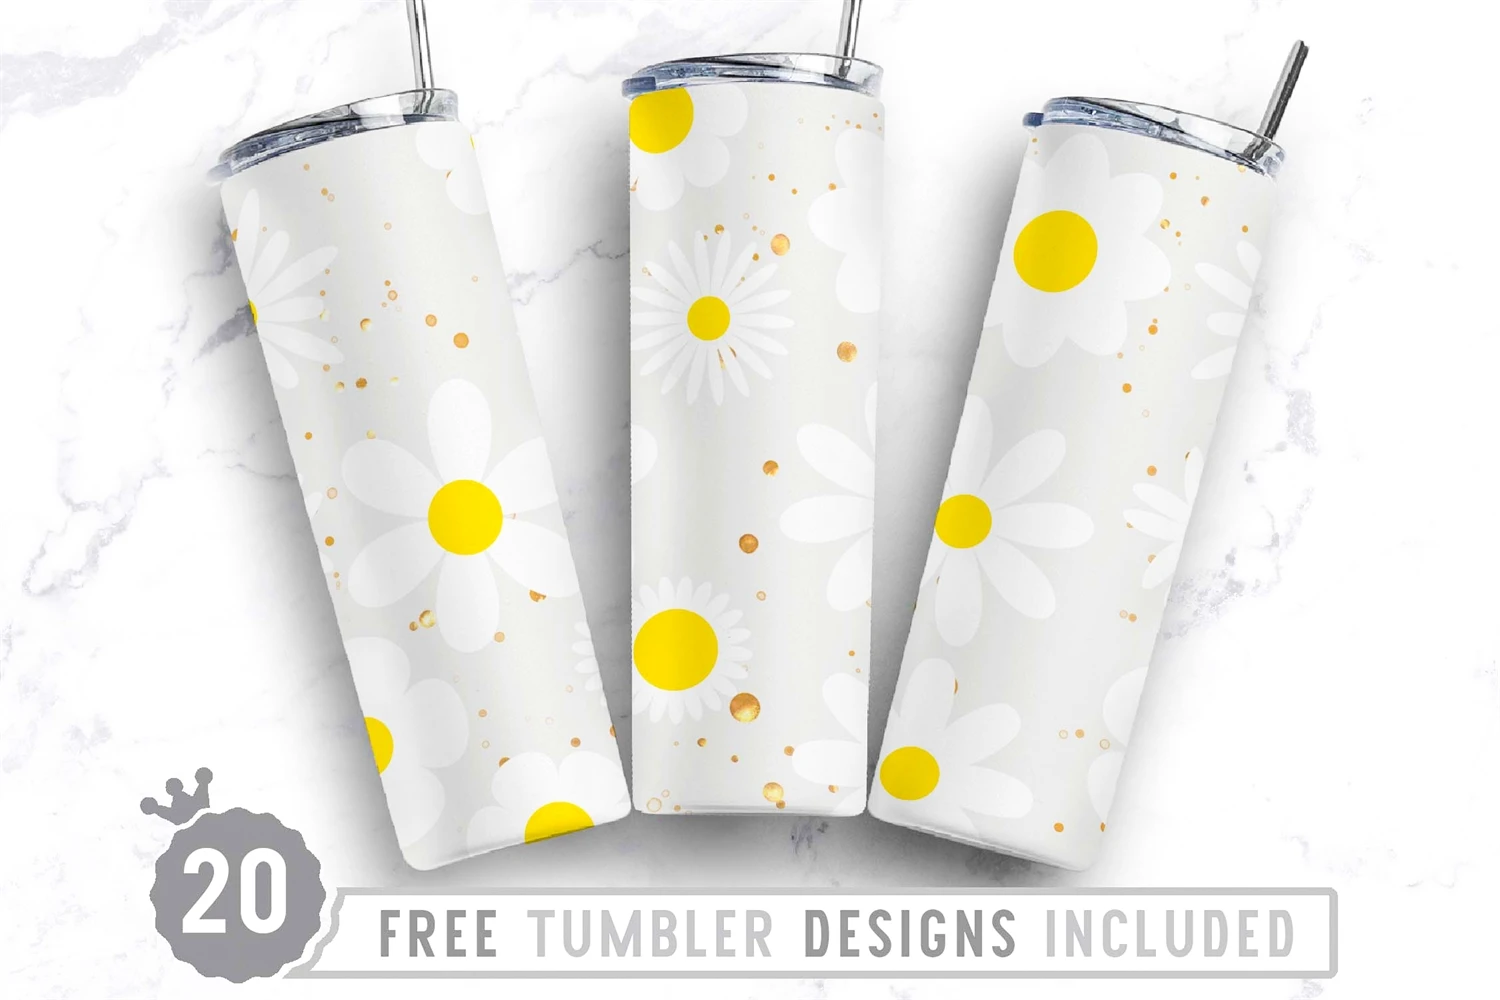 Daisy tumbler design, 20 oz skinny tumbler design, sublimation image,  tumbler wrap, Daisy cup, Daisy sublimation, tumbler design, 20oz